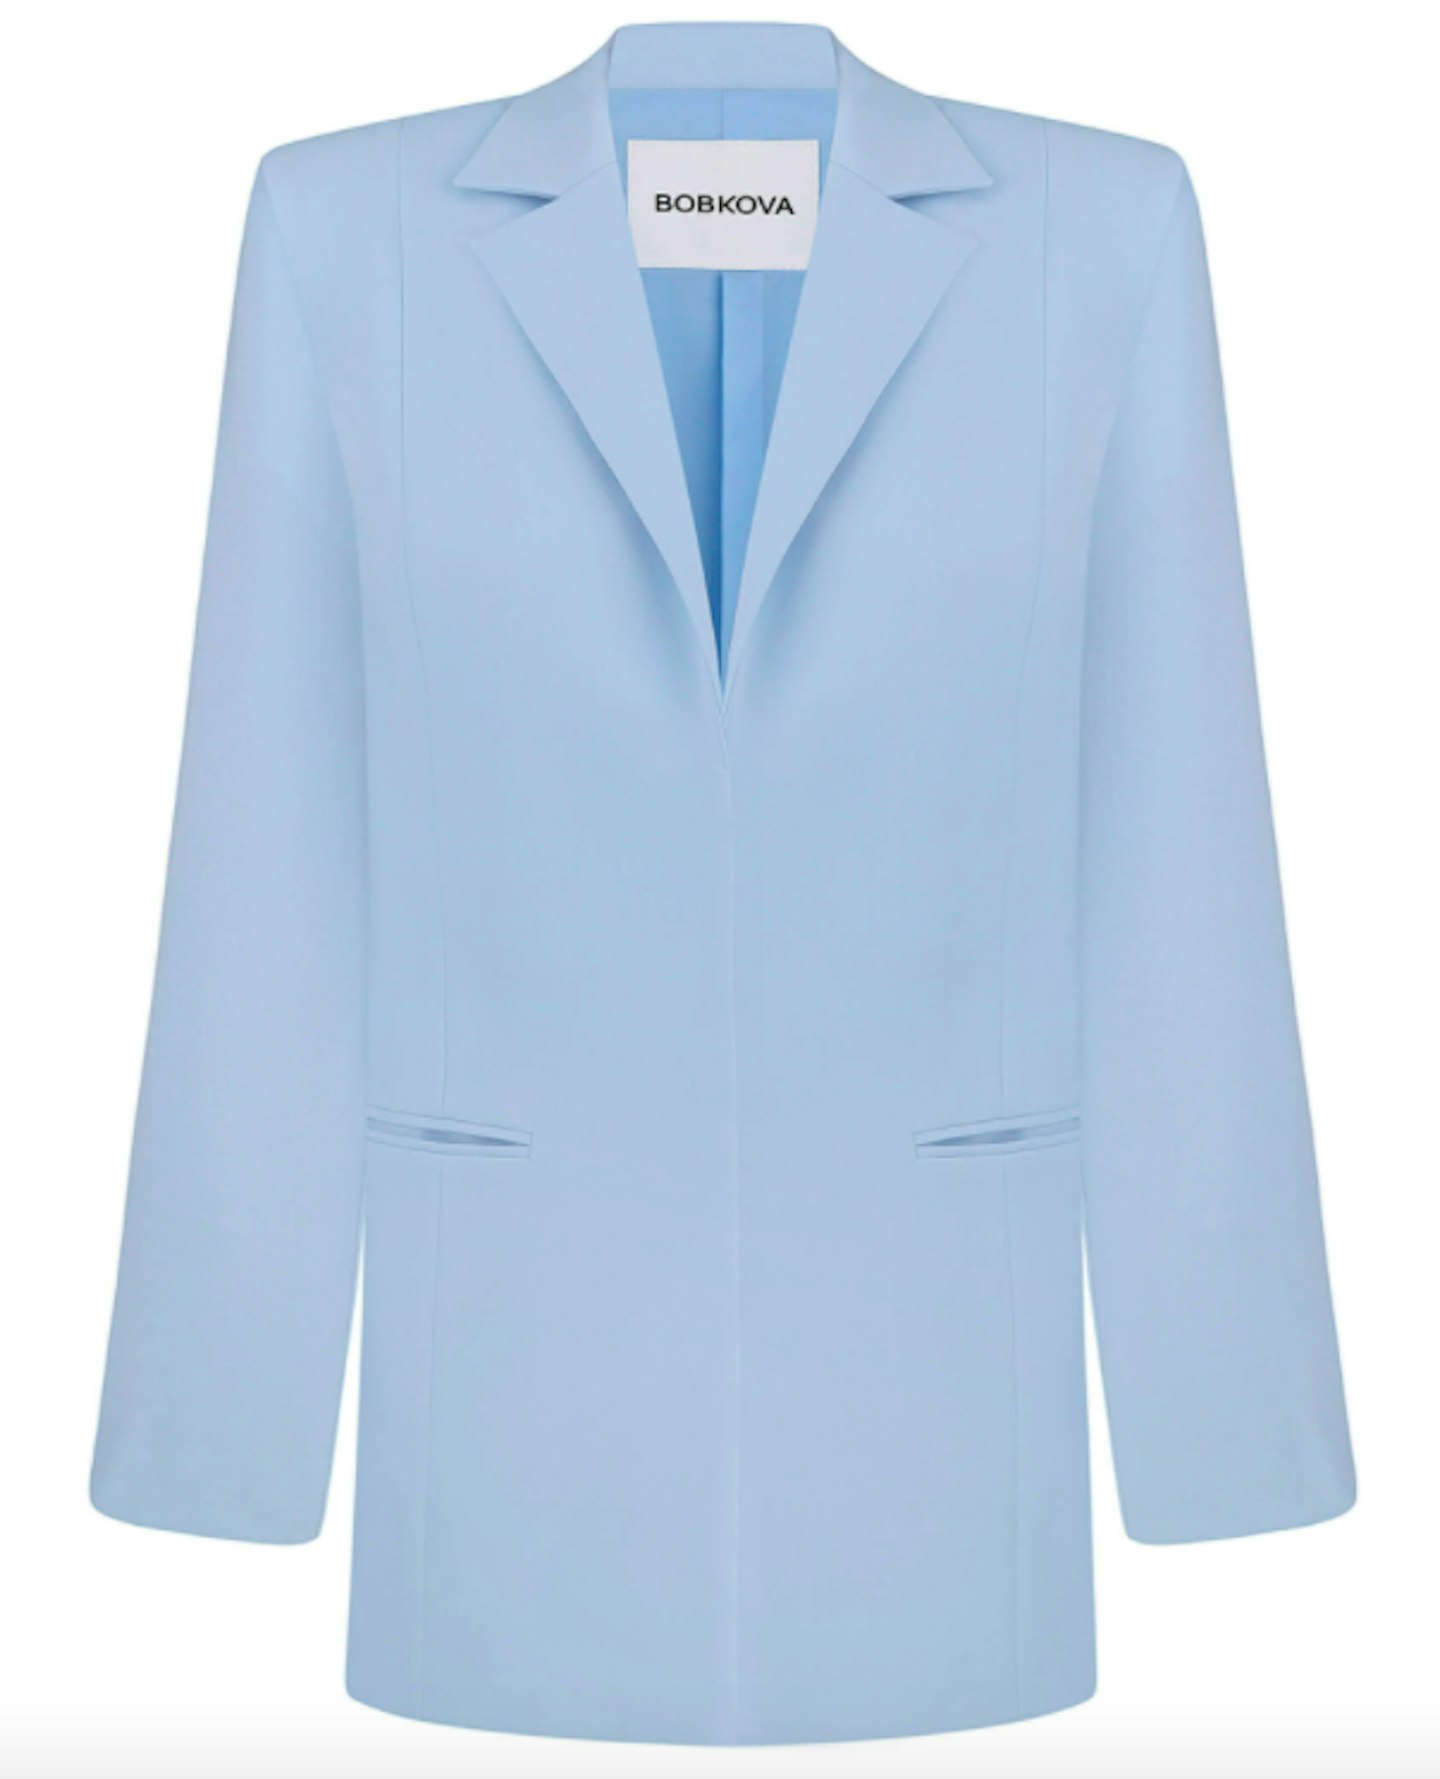 BOBKOVA, Blue Jacket, £404